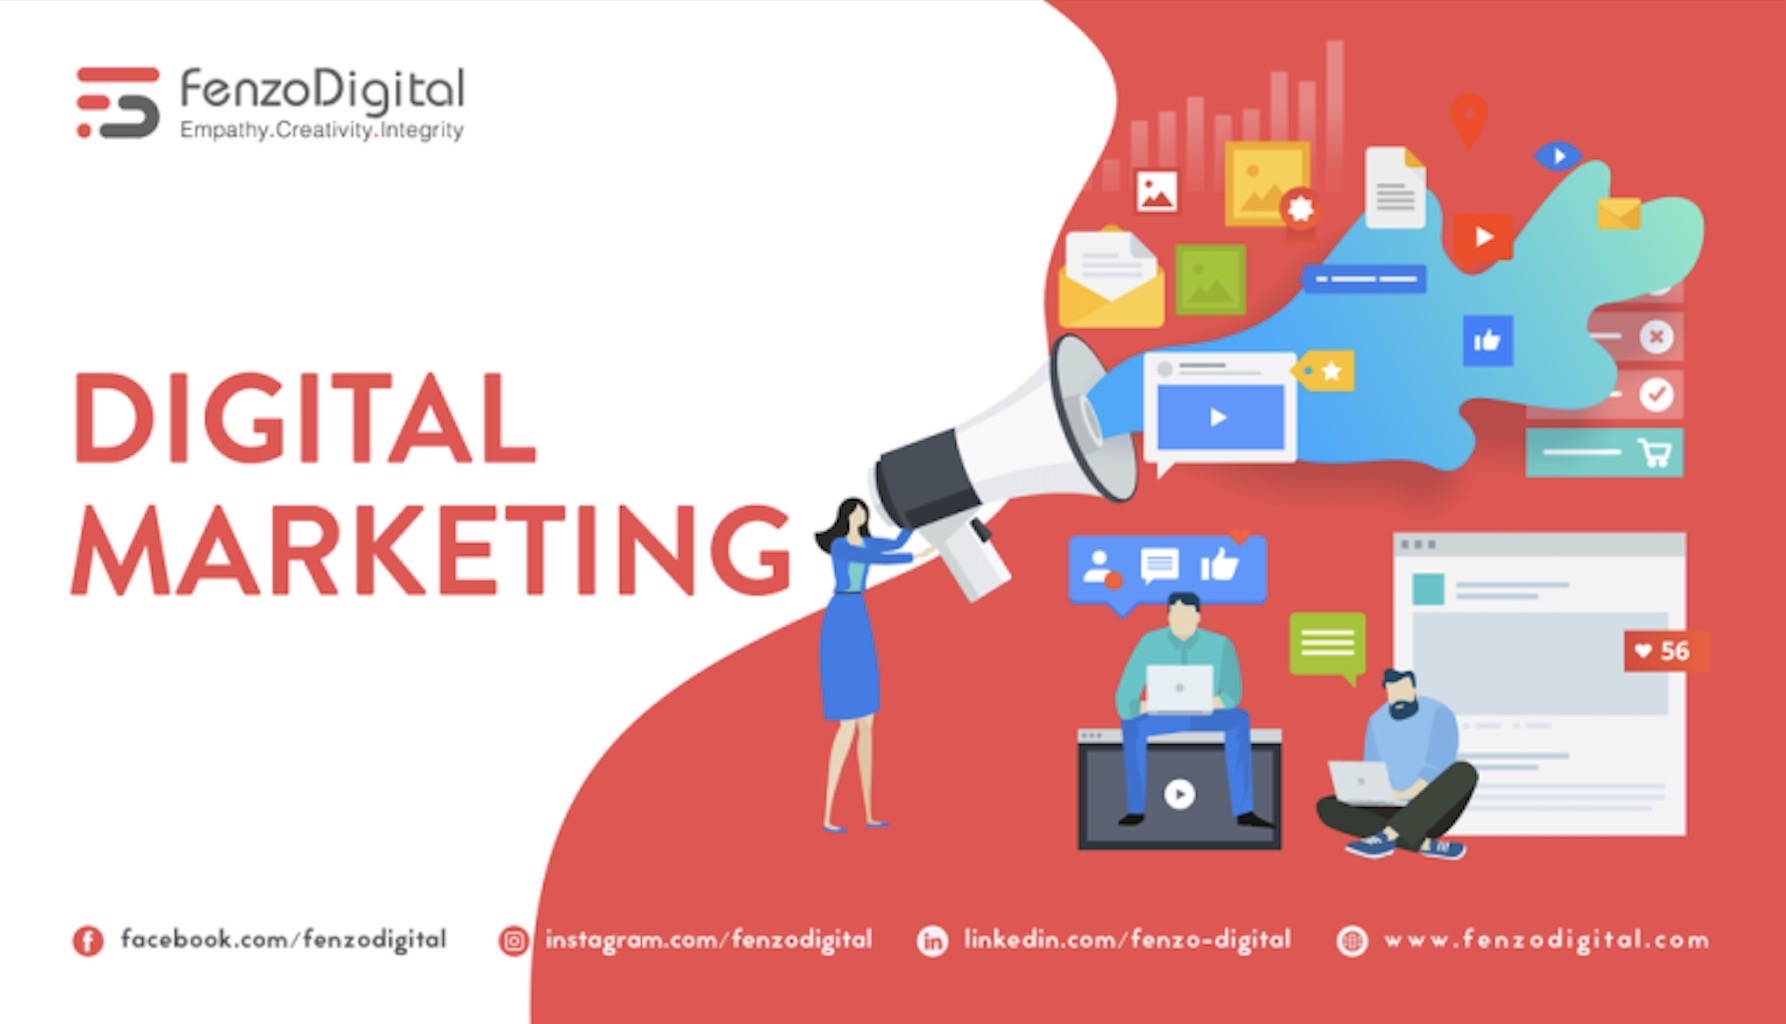 Digital Marketing in Singapore Digital Marketing 1786x1024 1 -